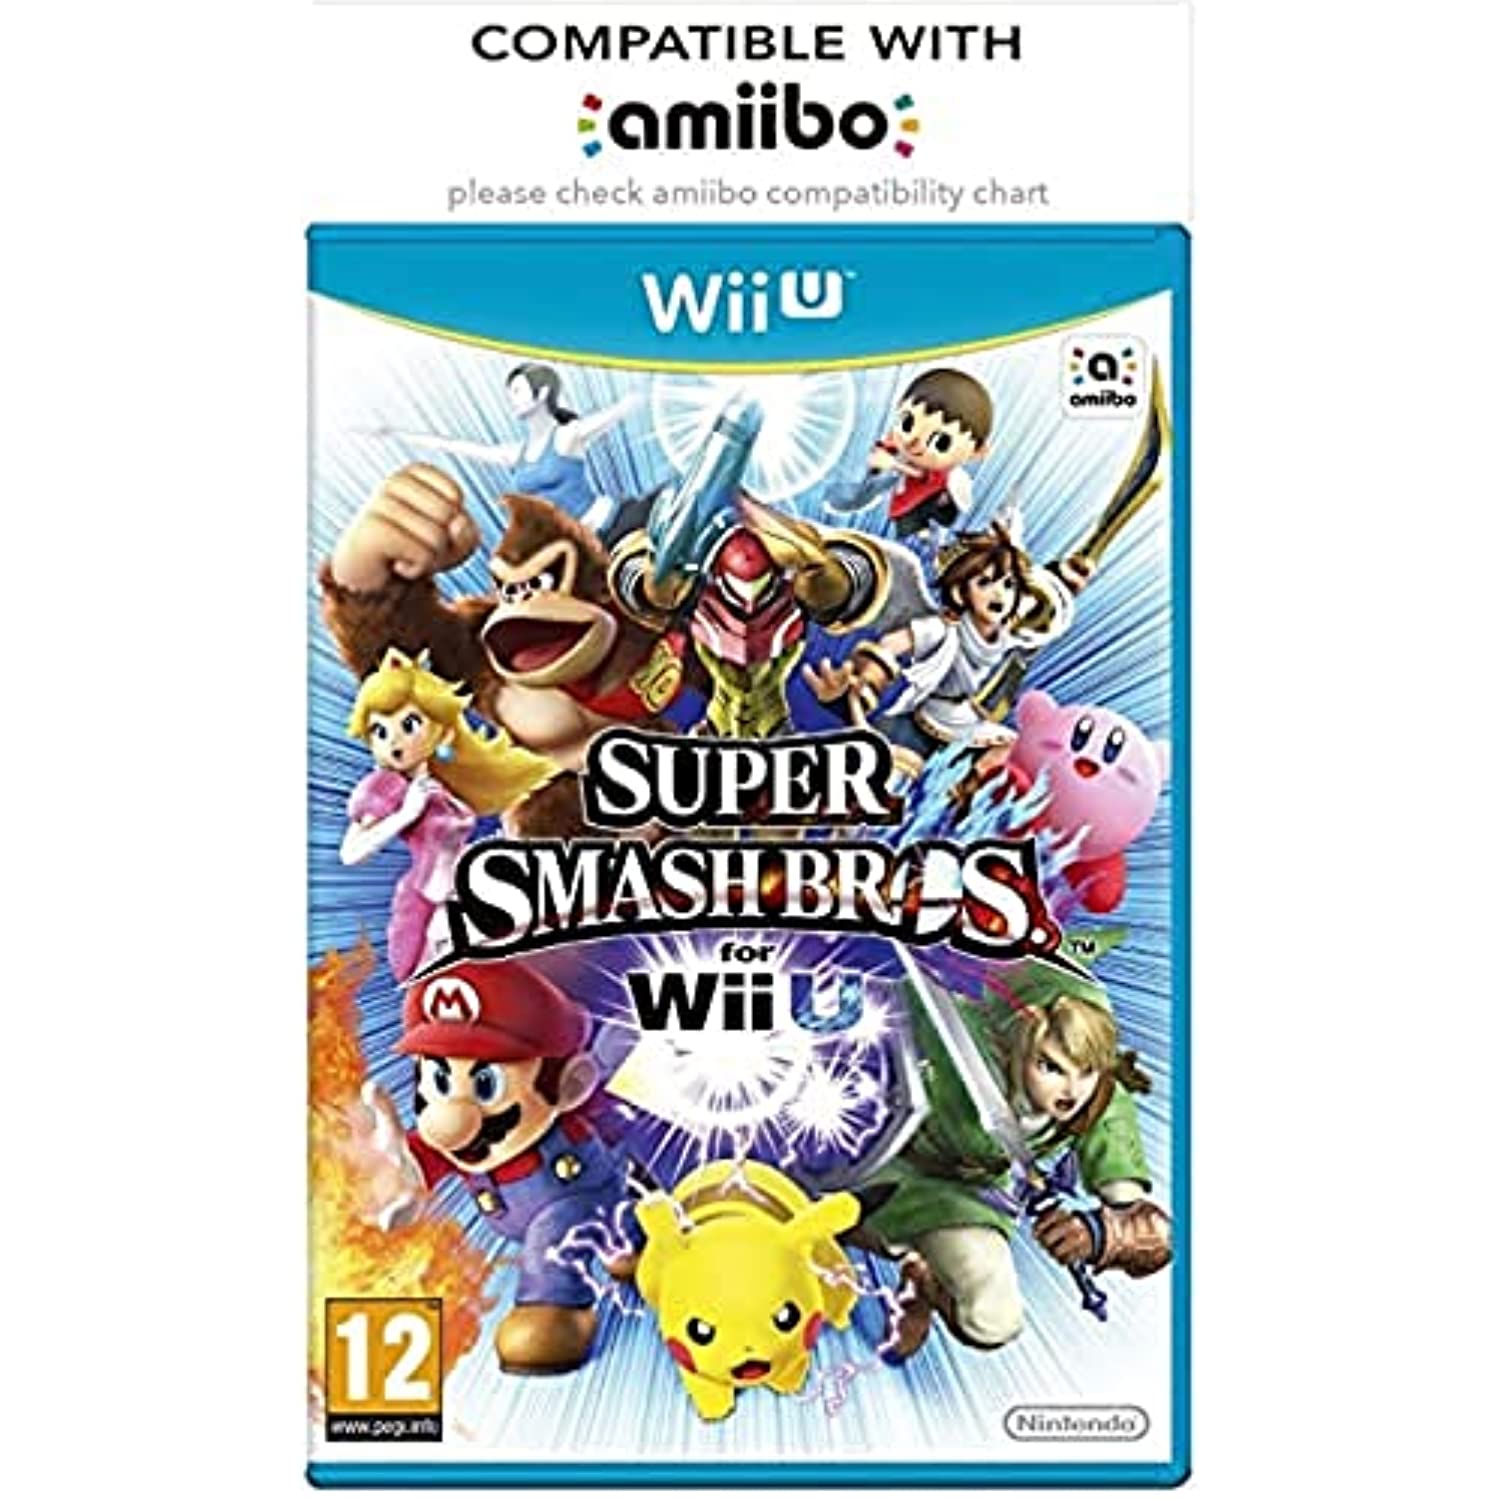 Super Smash Bros (Nintendo Wii U) - image 1 of 3